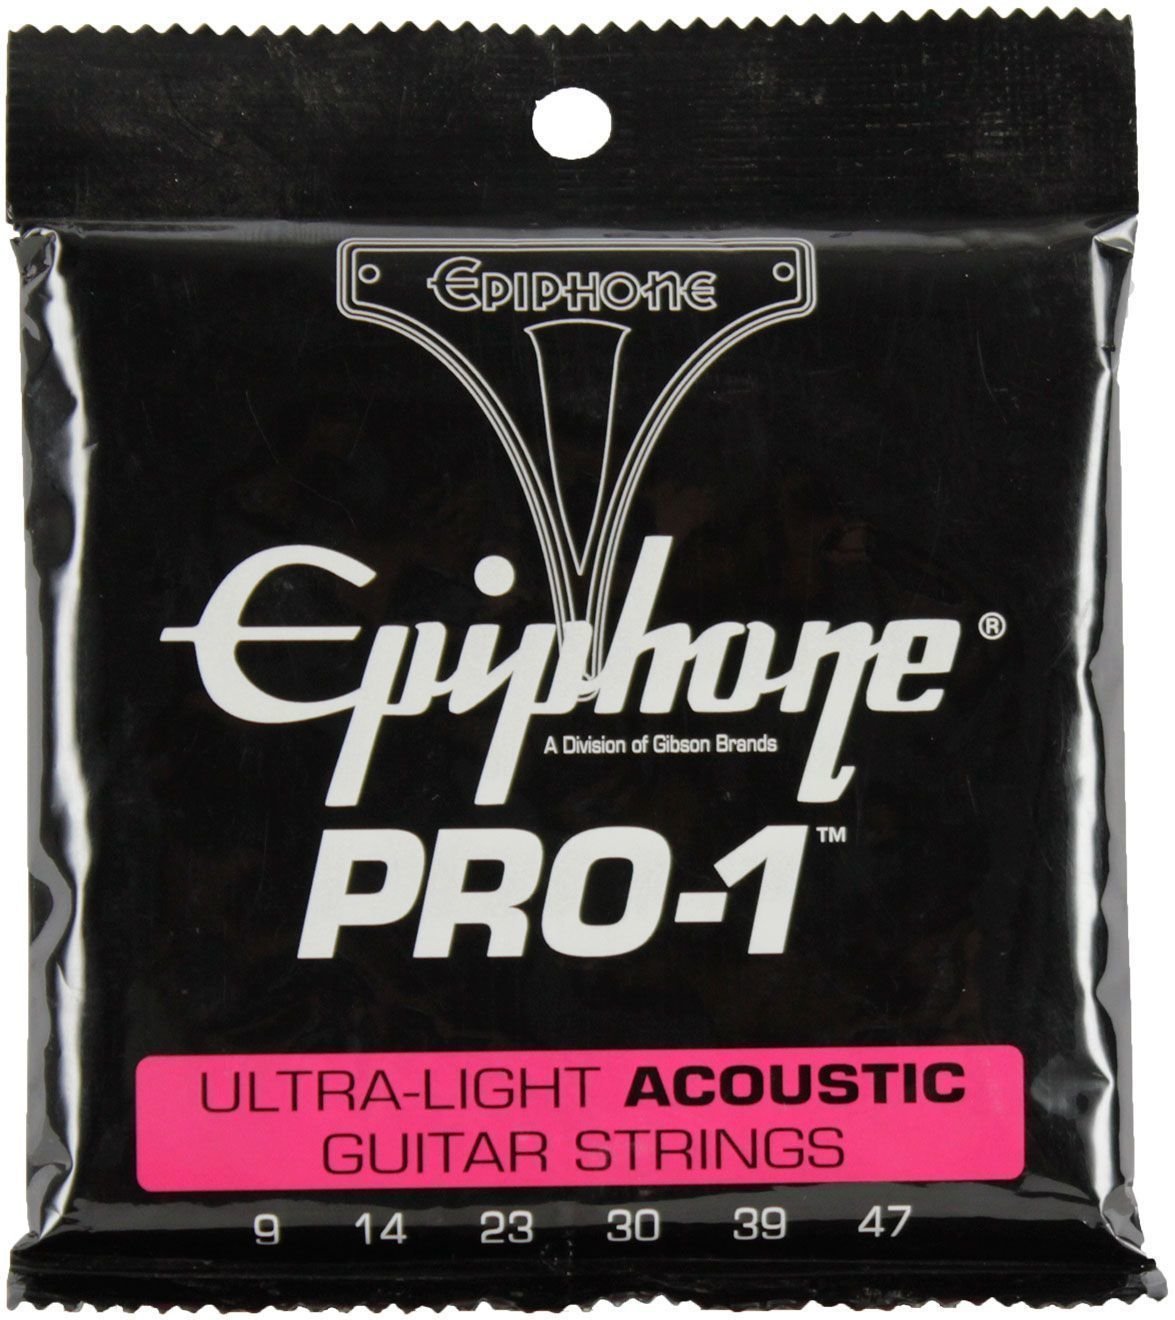 Cordas de guitarra Epiphone Pro-1 Ultra-Light Acoustic Strings